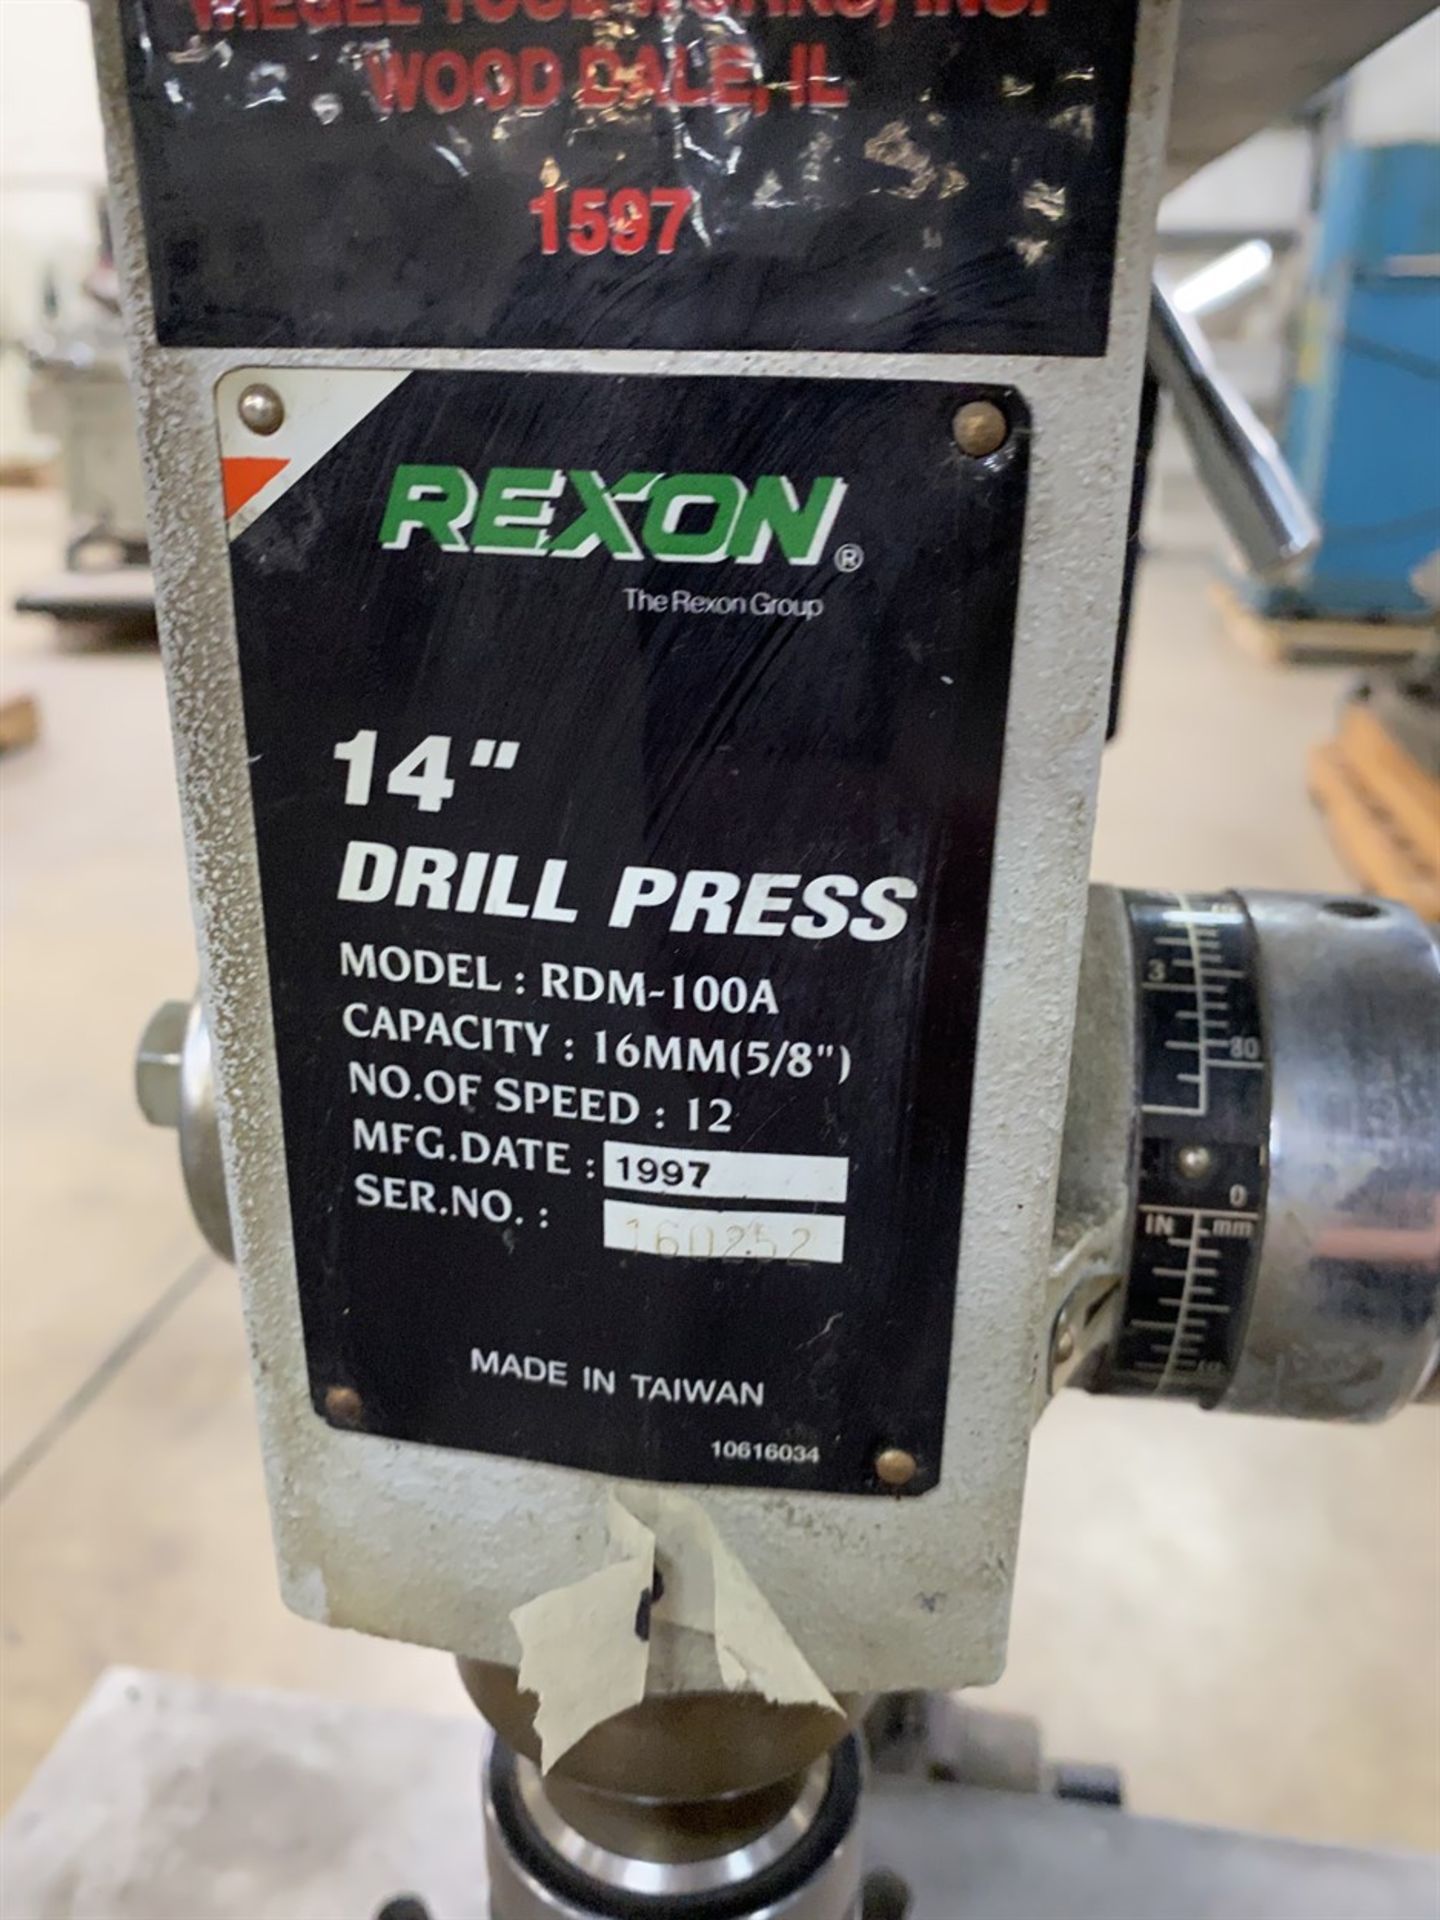 REXON RDM-100A 14" Drill Press, s/n 160252 - Image 4 of 4